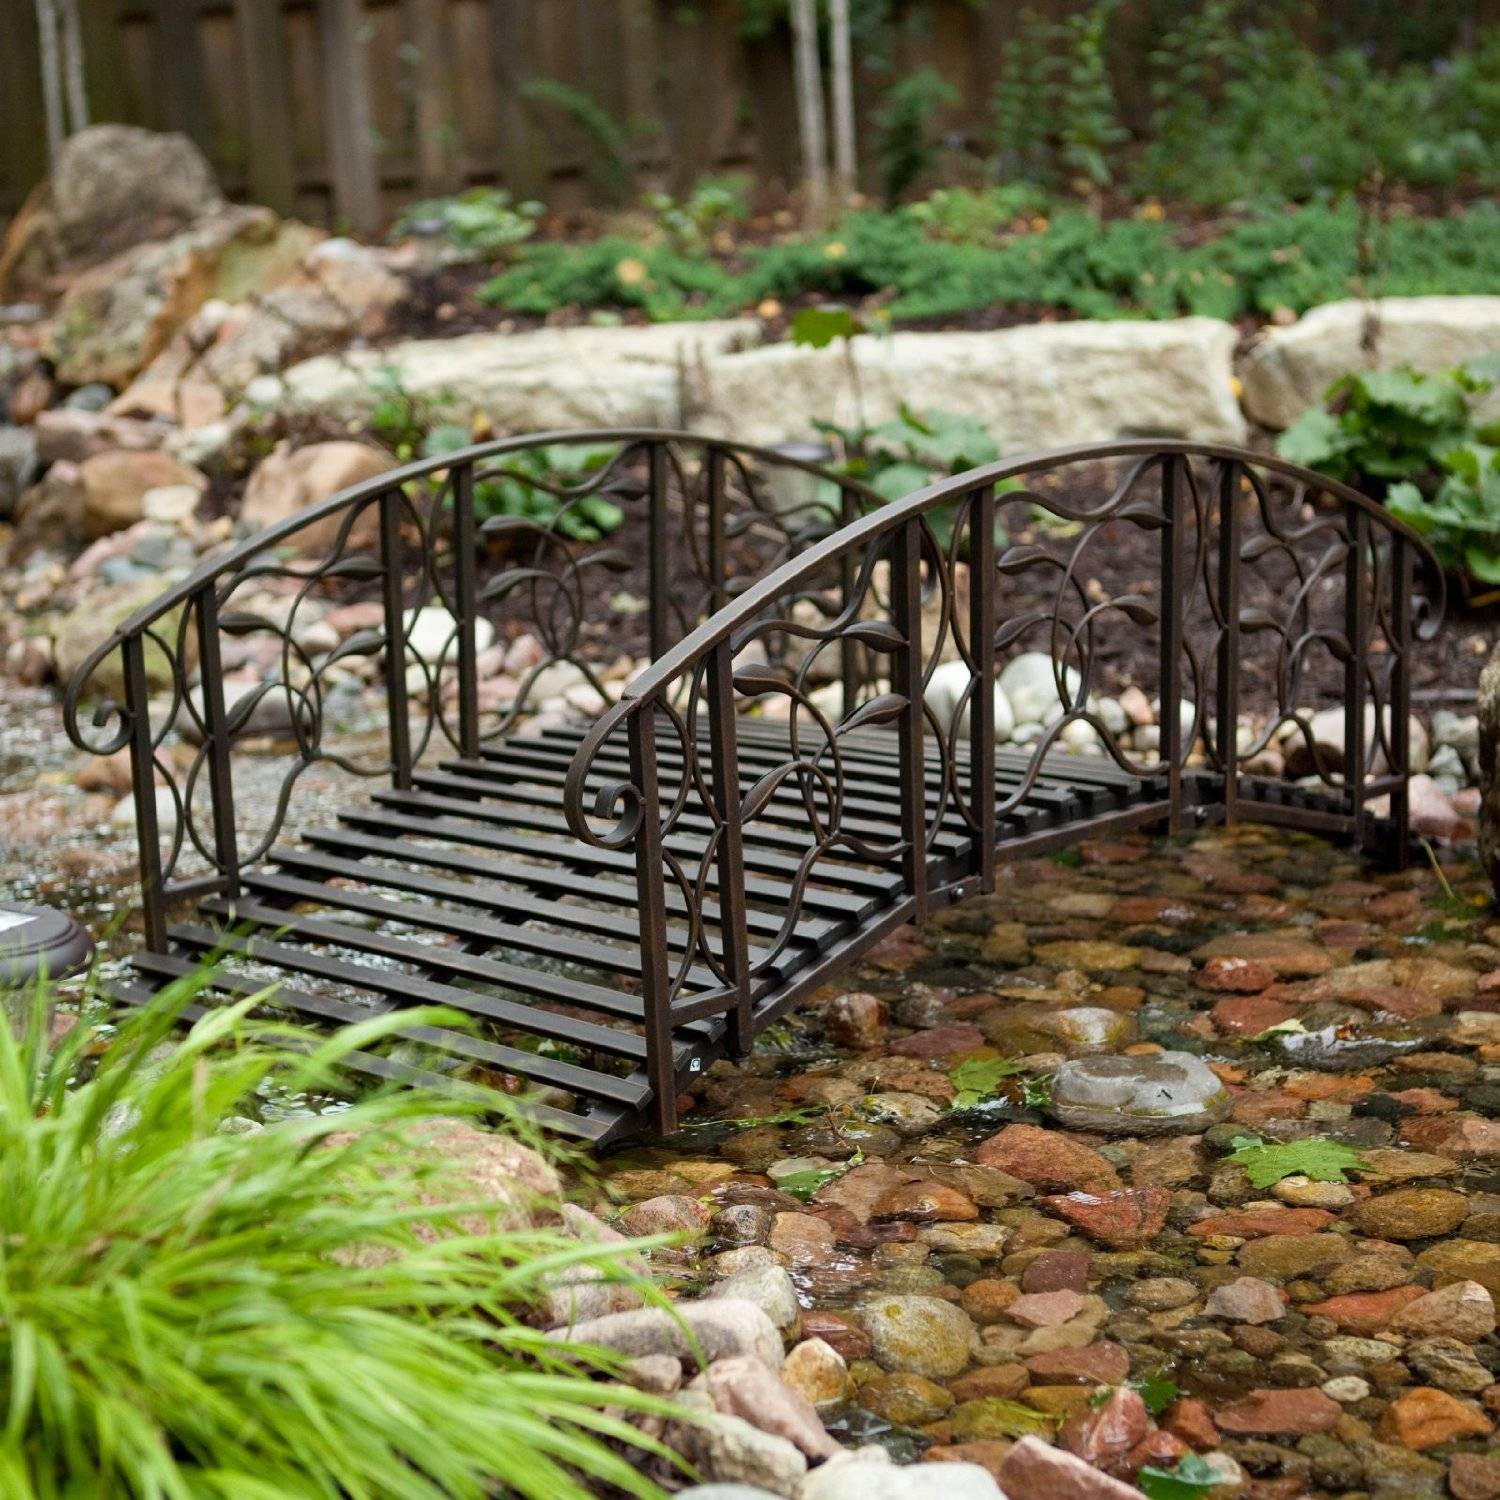 Awesomely Neat Diy Garden Bridge Ideas